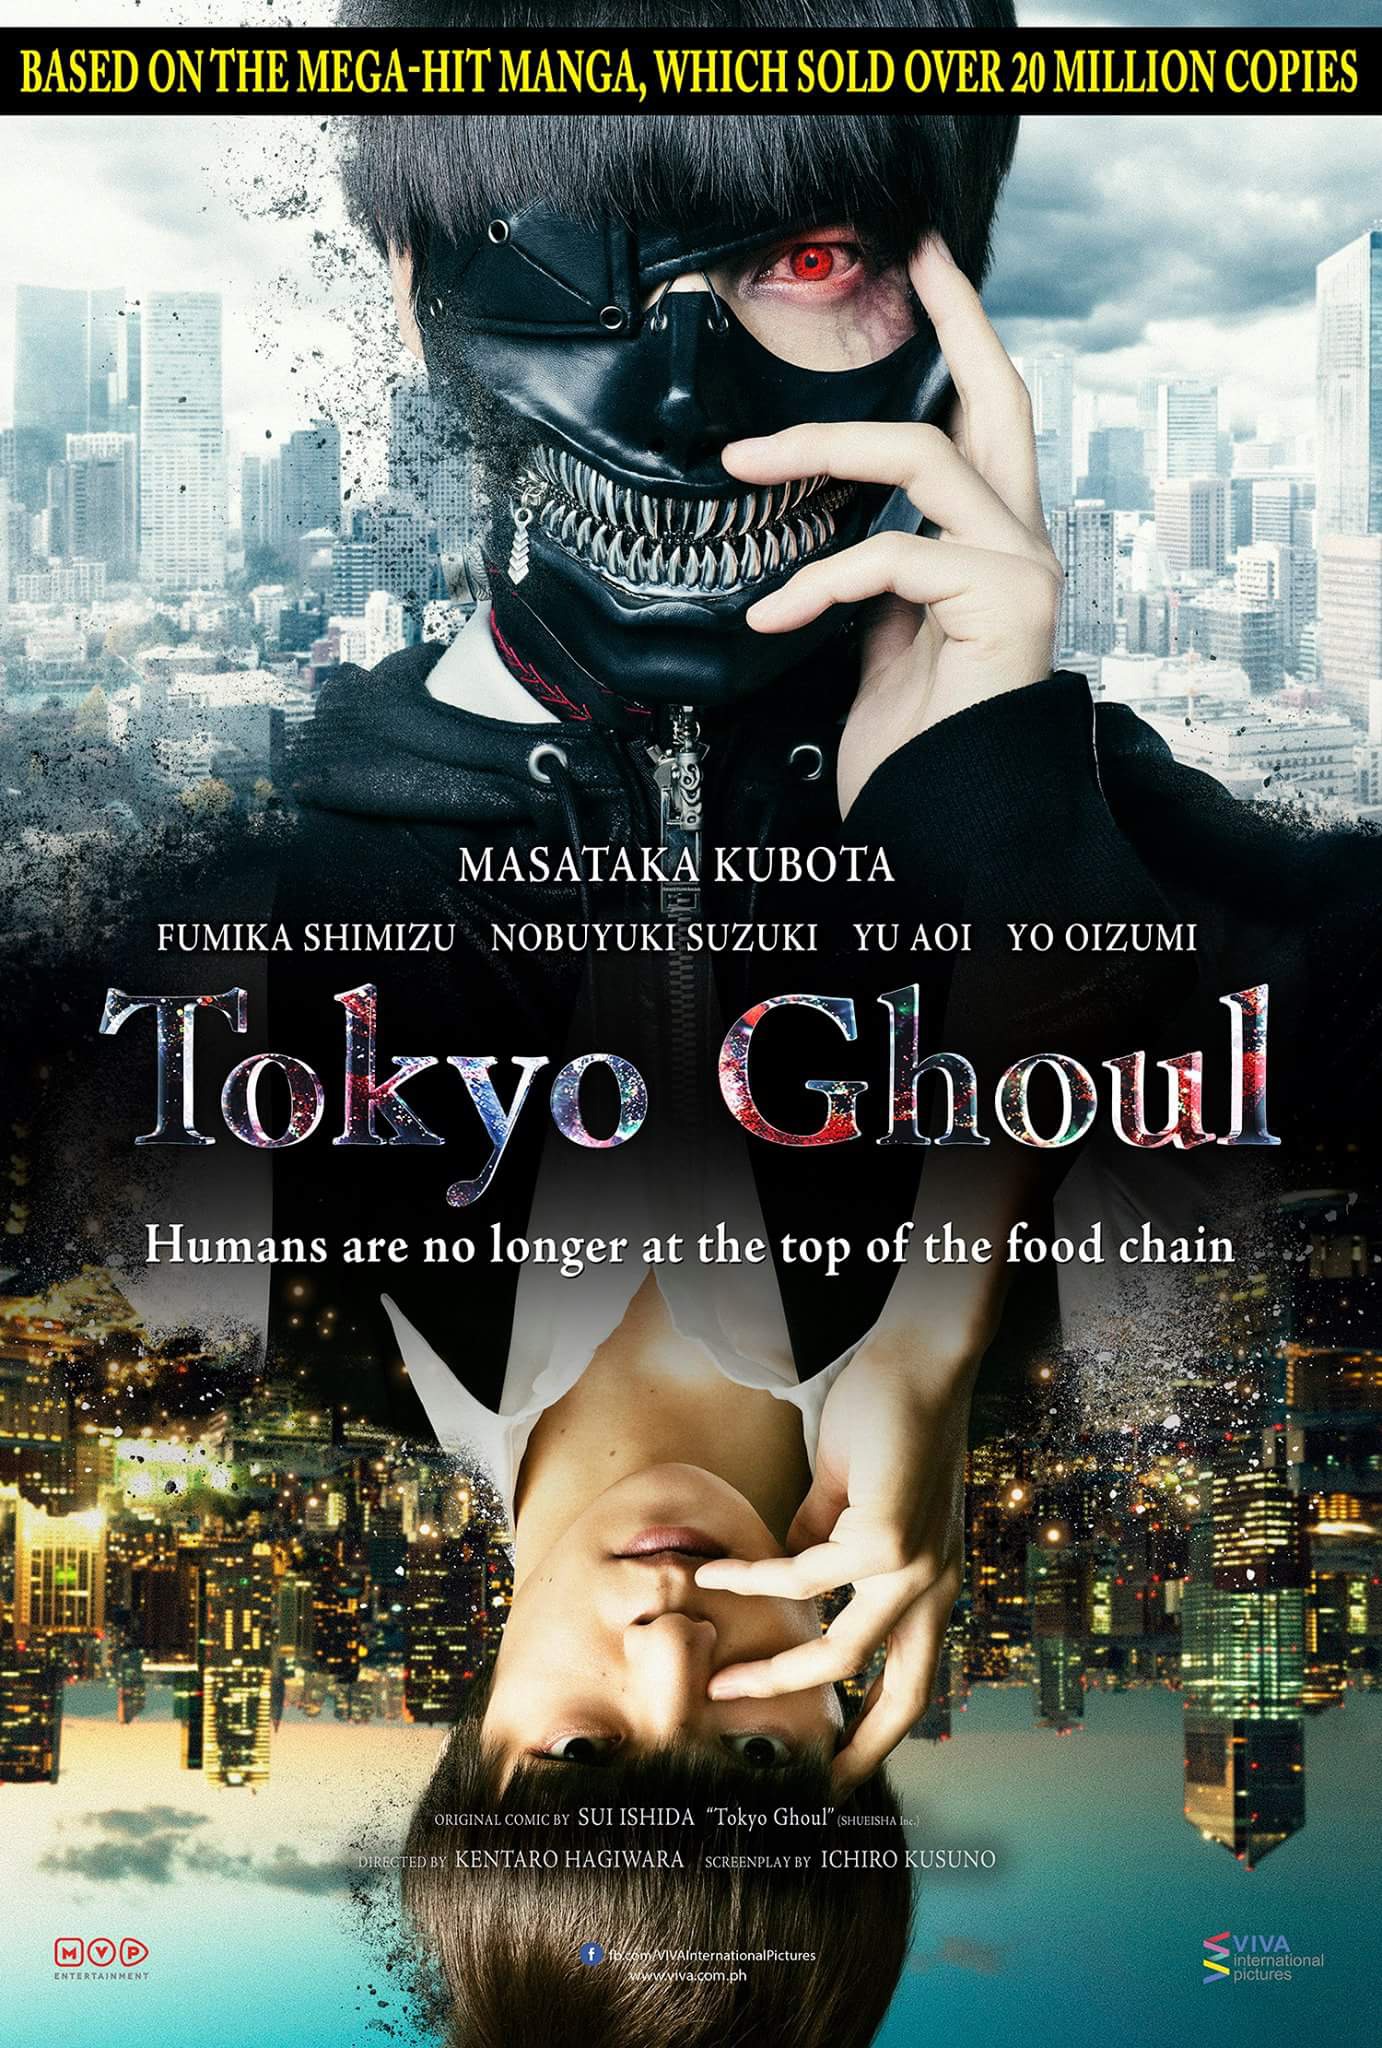 Mega Sized Movie Poster Image for Tôkyô gûru (#1 of 3)